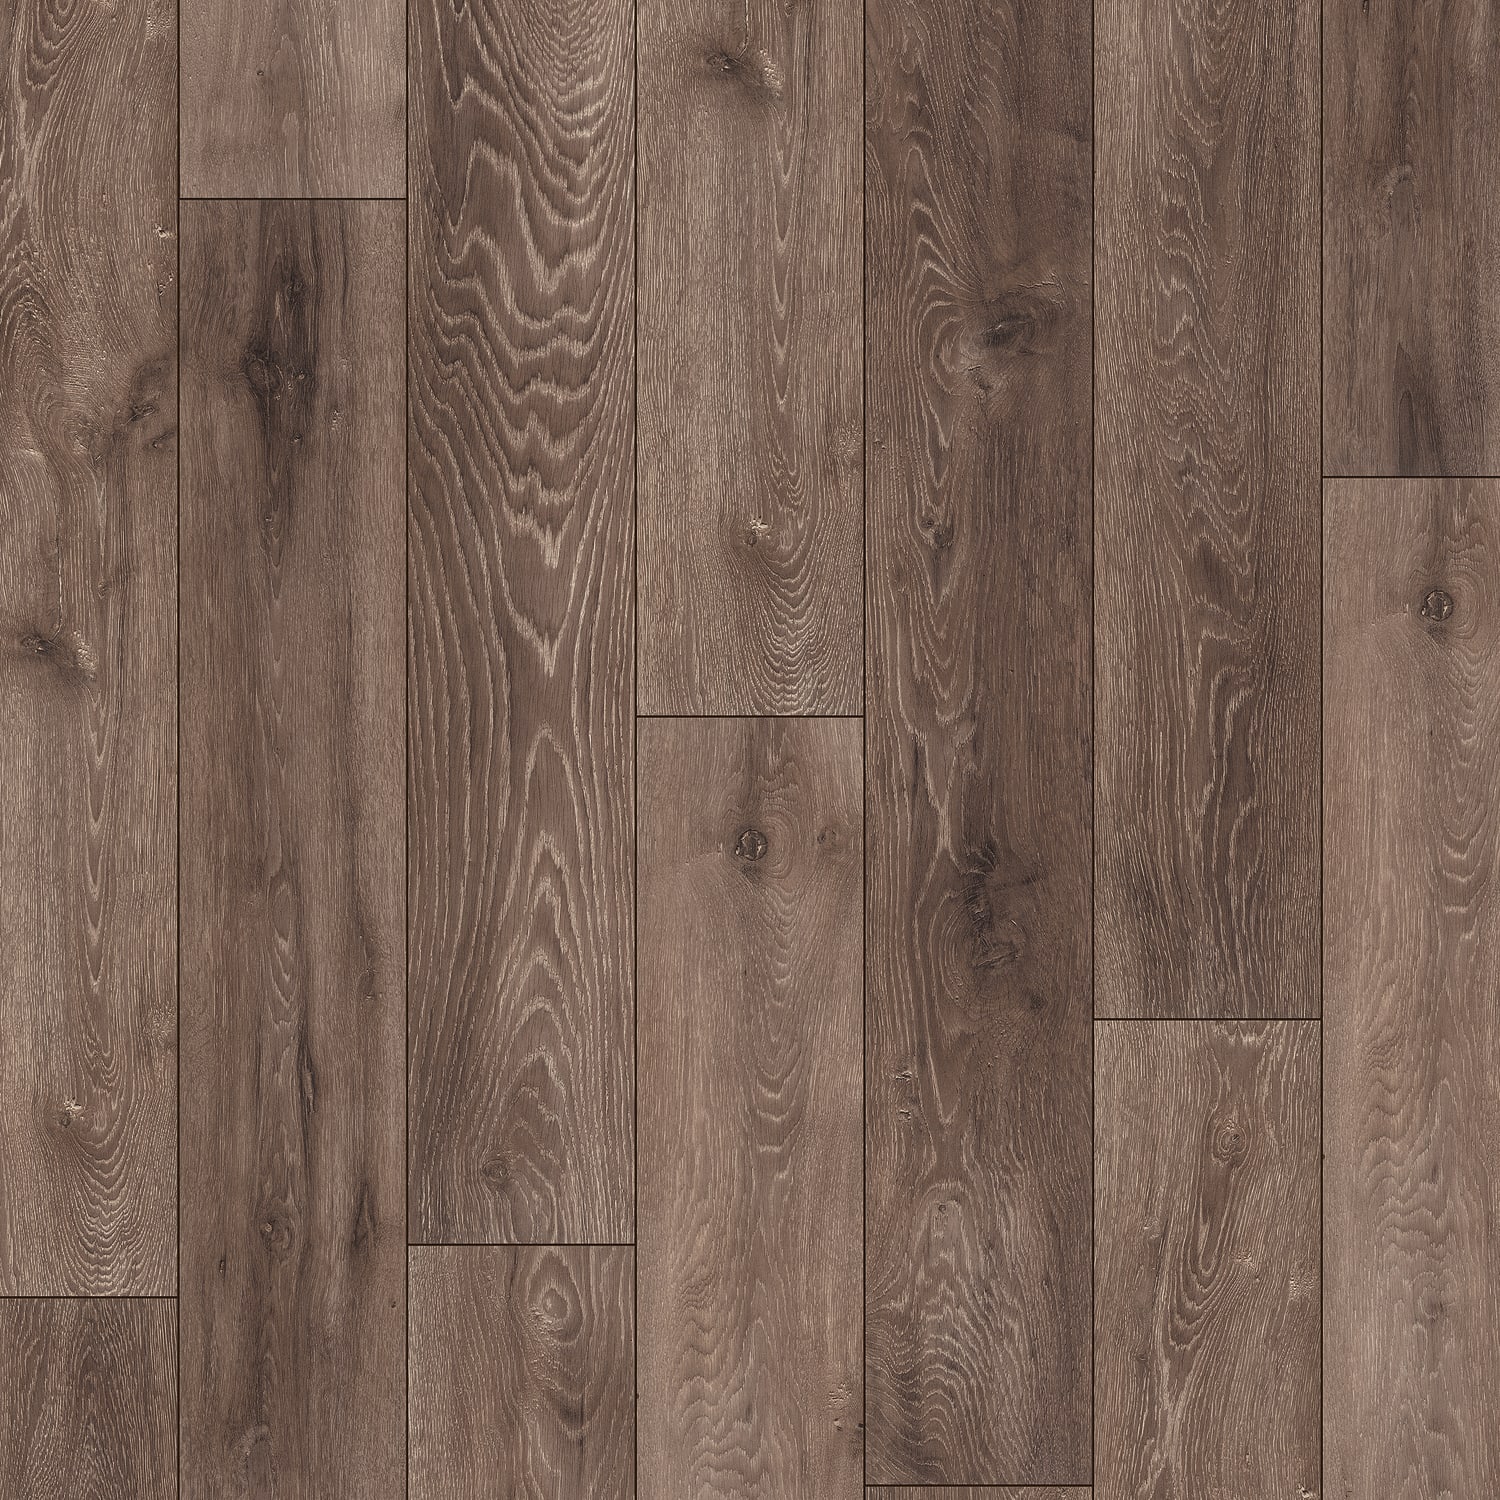 leksikon Enumerate Rød dato Galloway Brown Oak 8mm Laminate Flooring - 2.22m2 | Wickes.co.uk